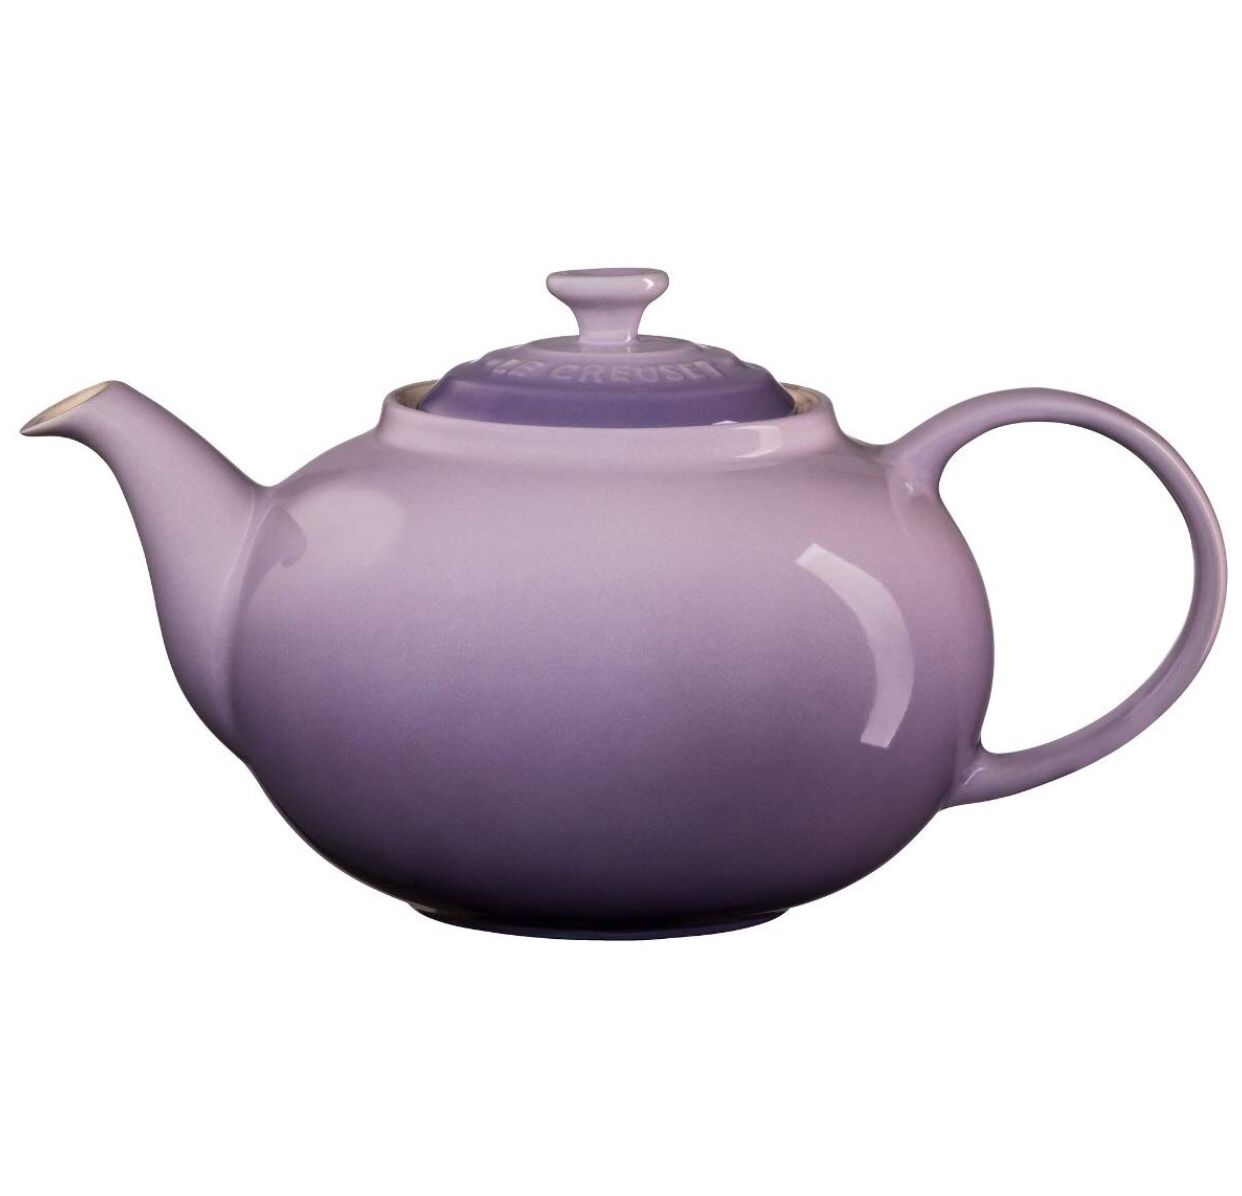 New Le Creuset Provence Heritage Stoneware Teapot